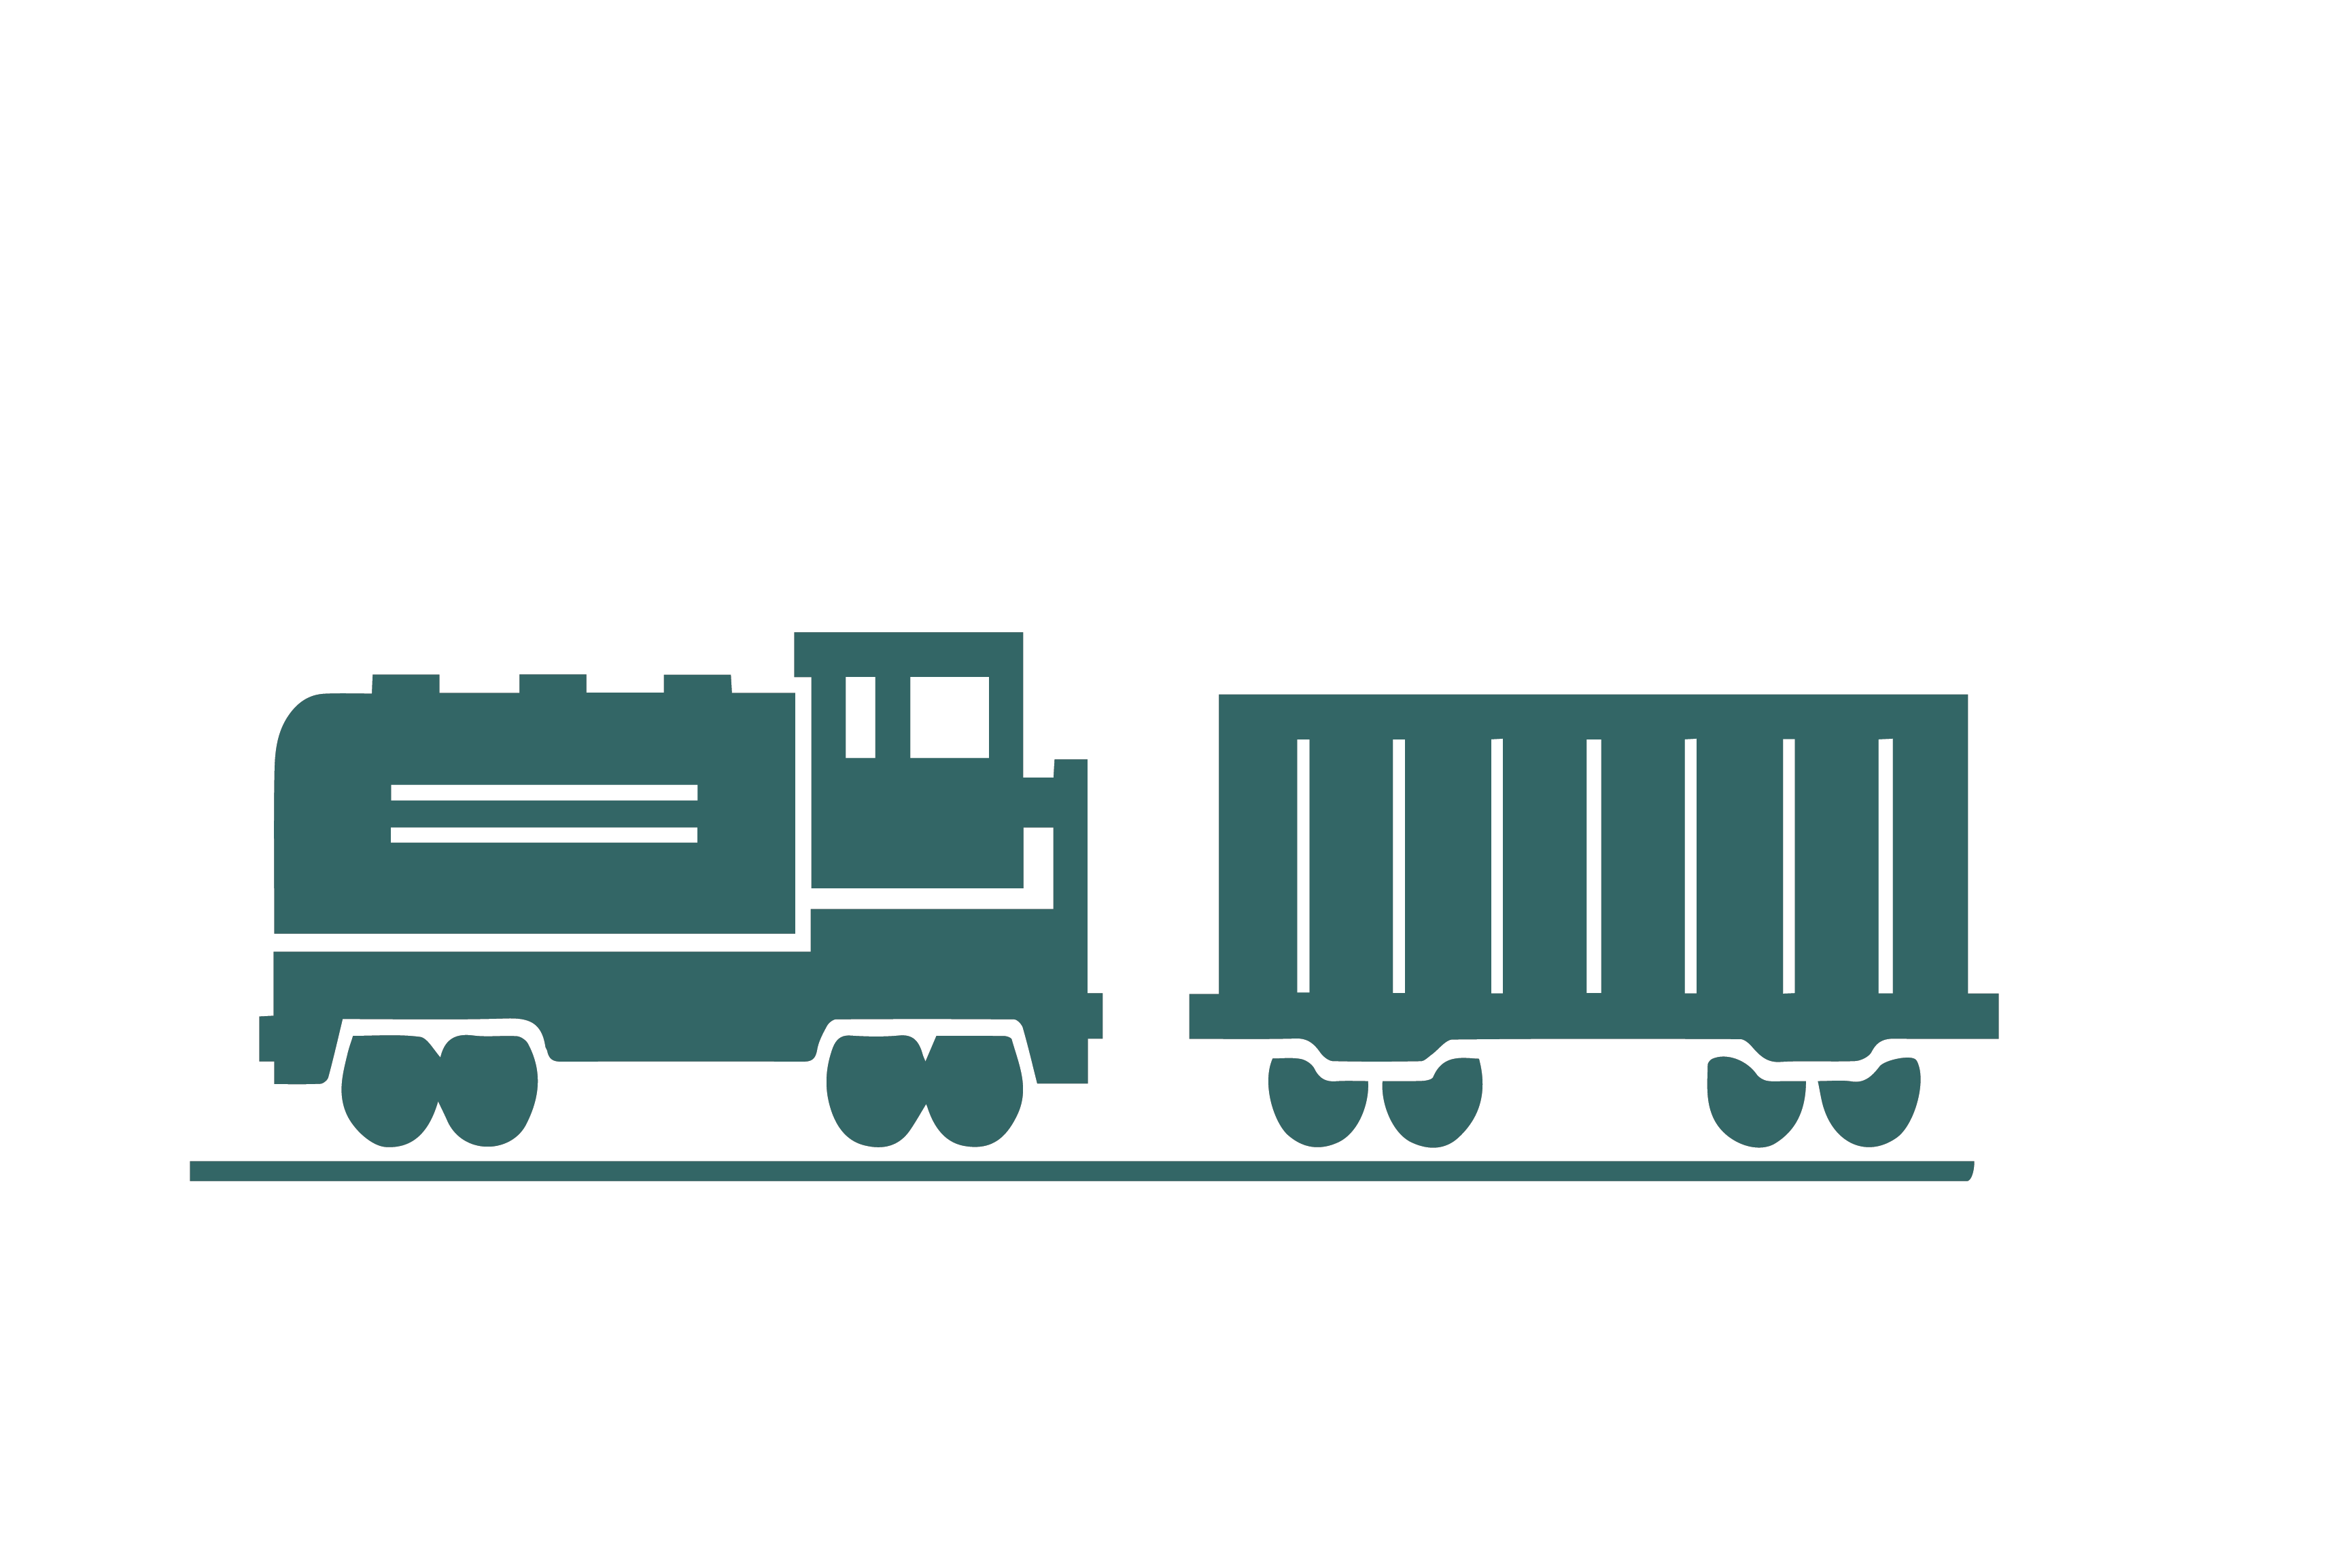 Logo de train